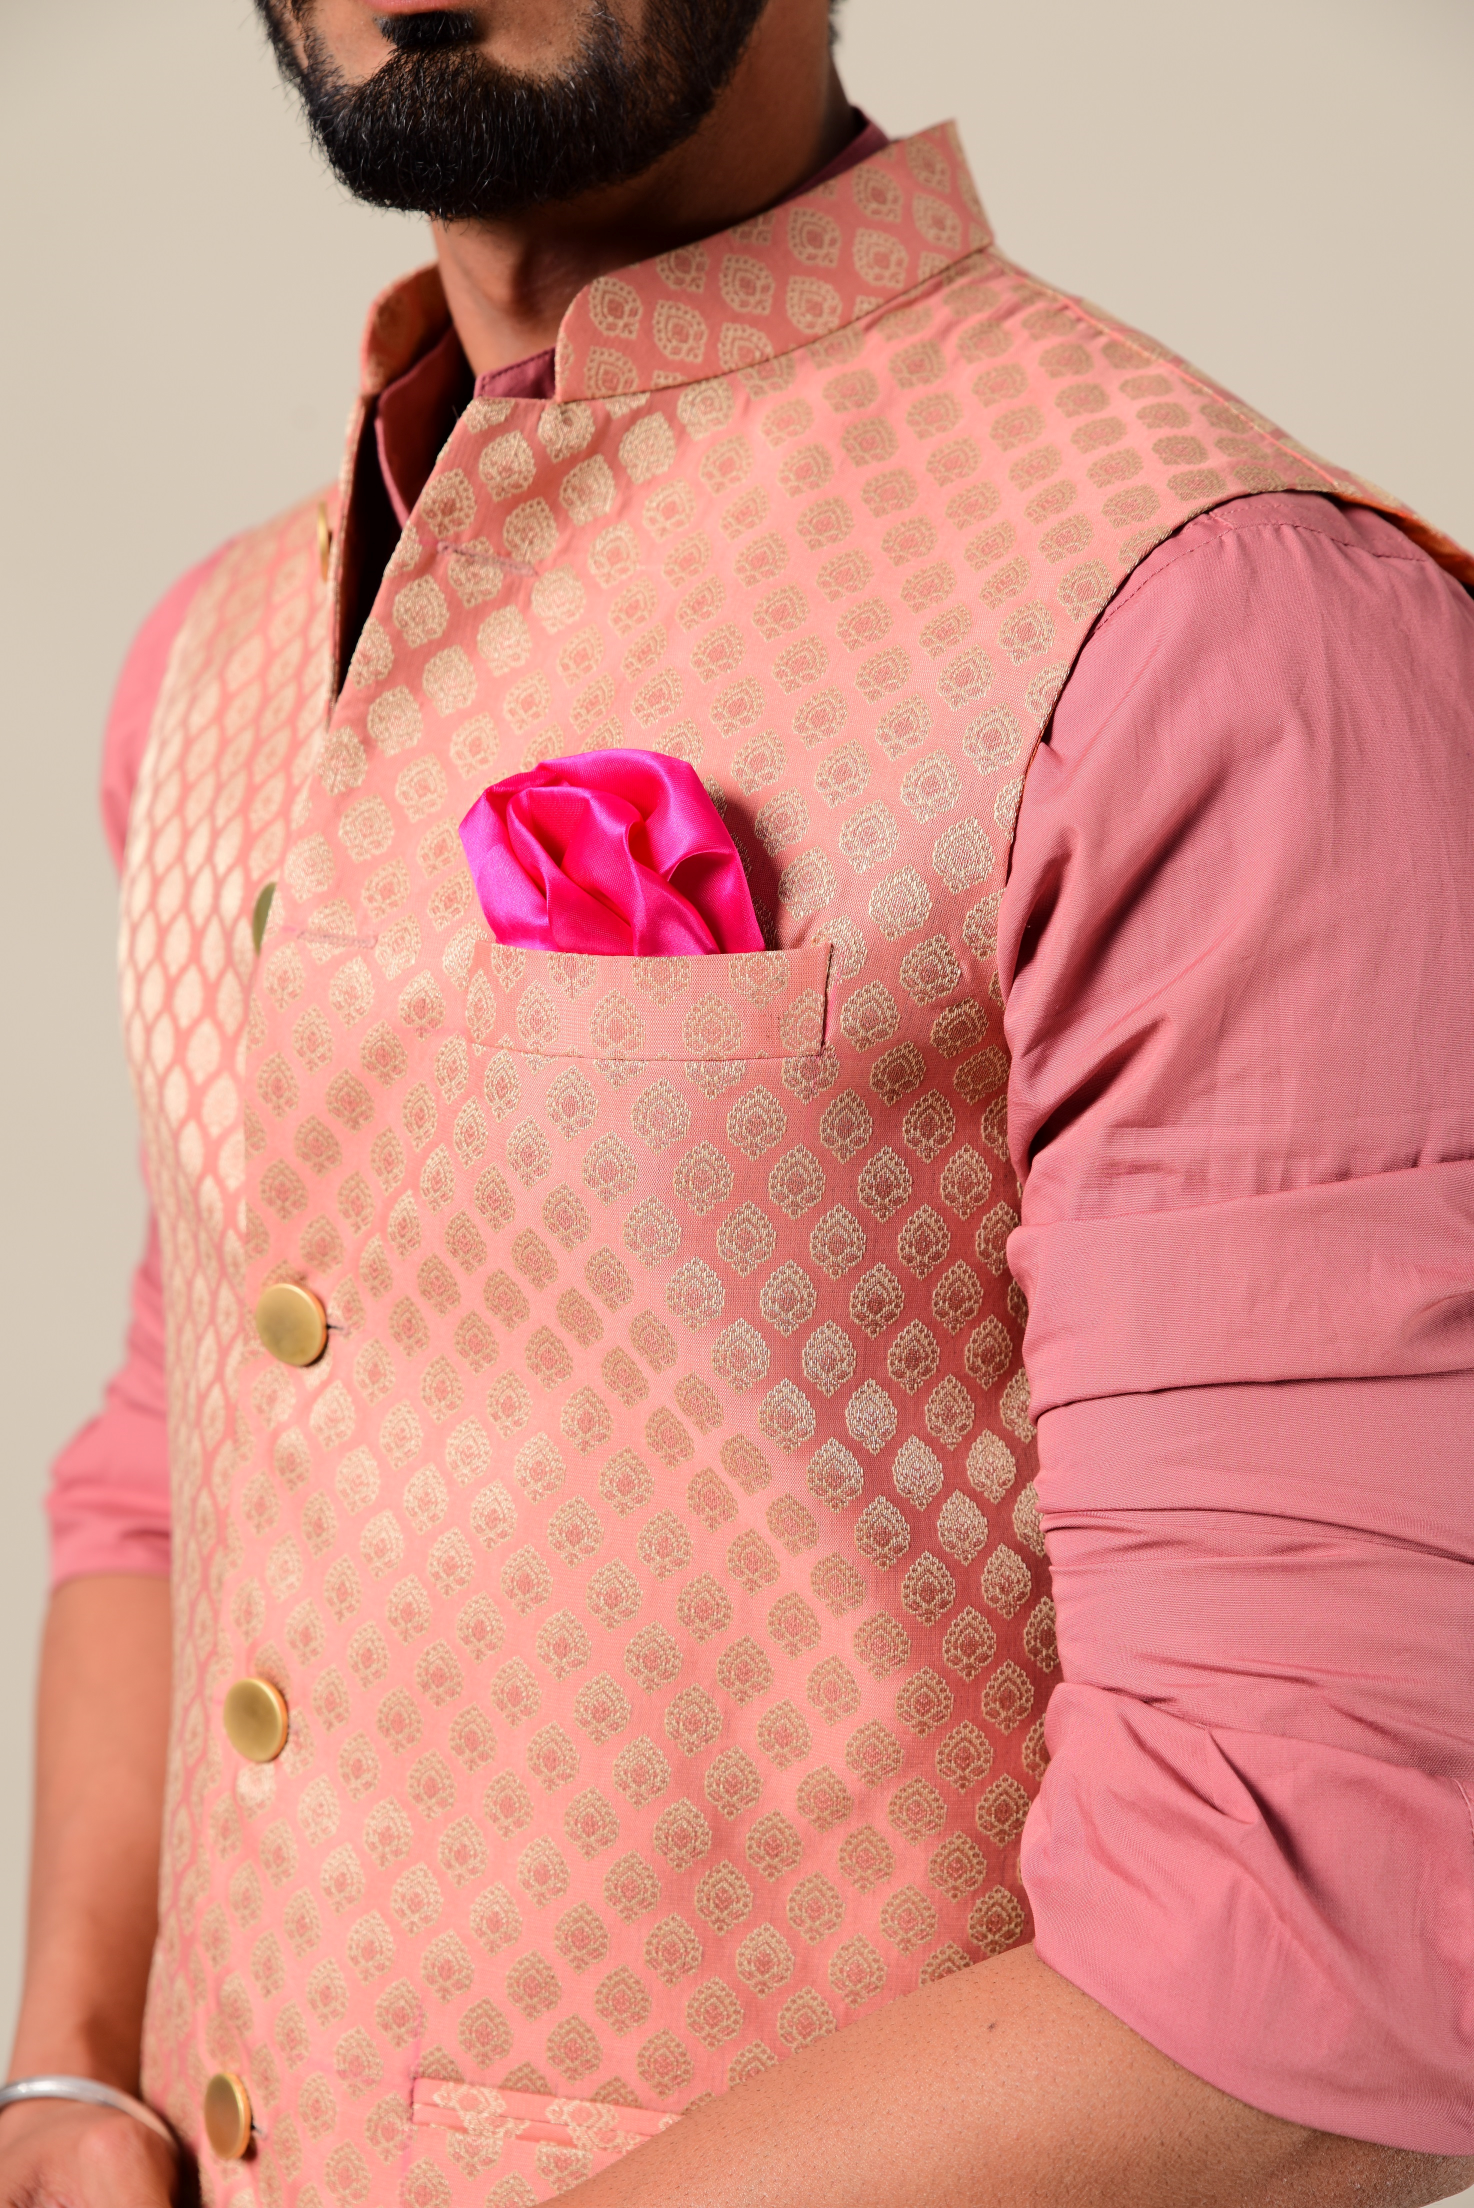 Stunning Ballet Pink Brocade Half Jodhpuri Jacket with Kurta-Pajama Set| Perfect for Wedding wear, Functional wear and Festive wear| Raksha Bandhan ,Diwali, Navratri|